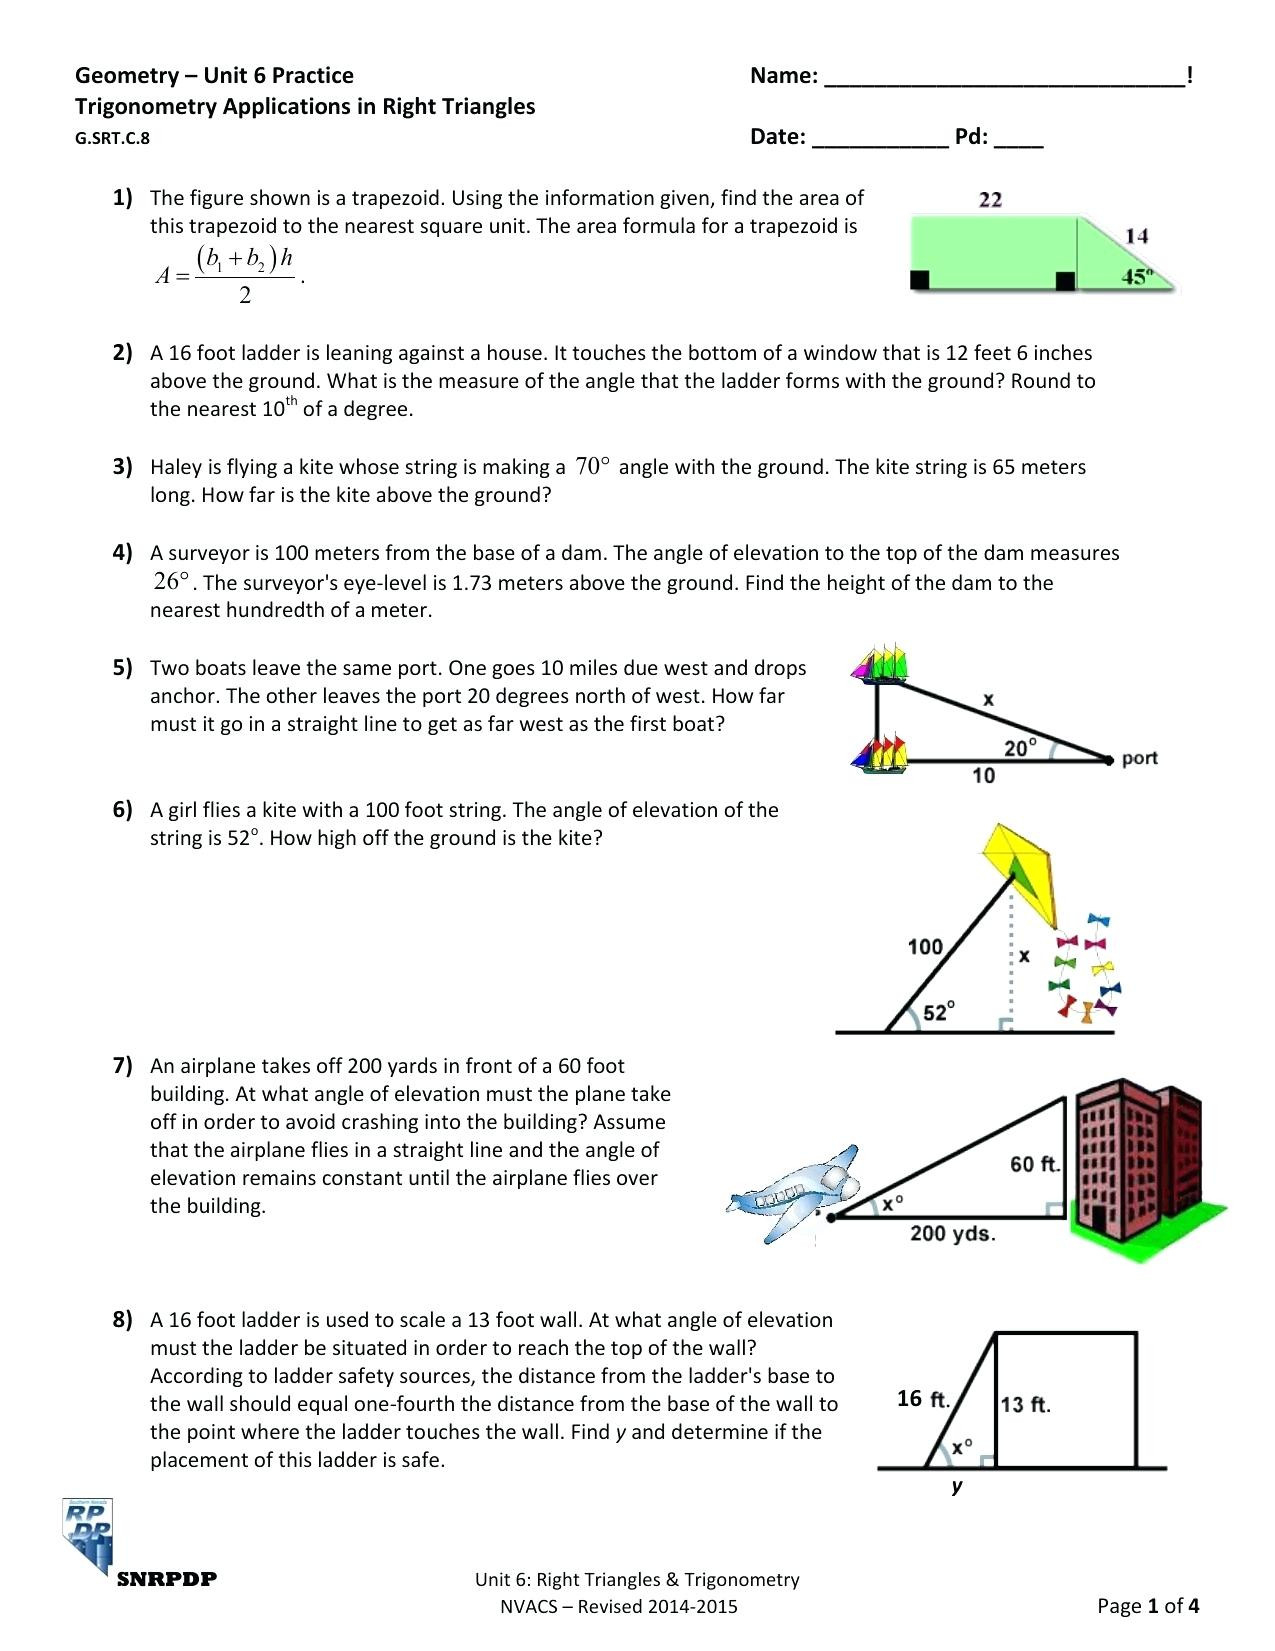 unit 12 trigonometry homework 1 answer key pdf